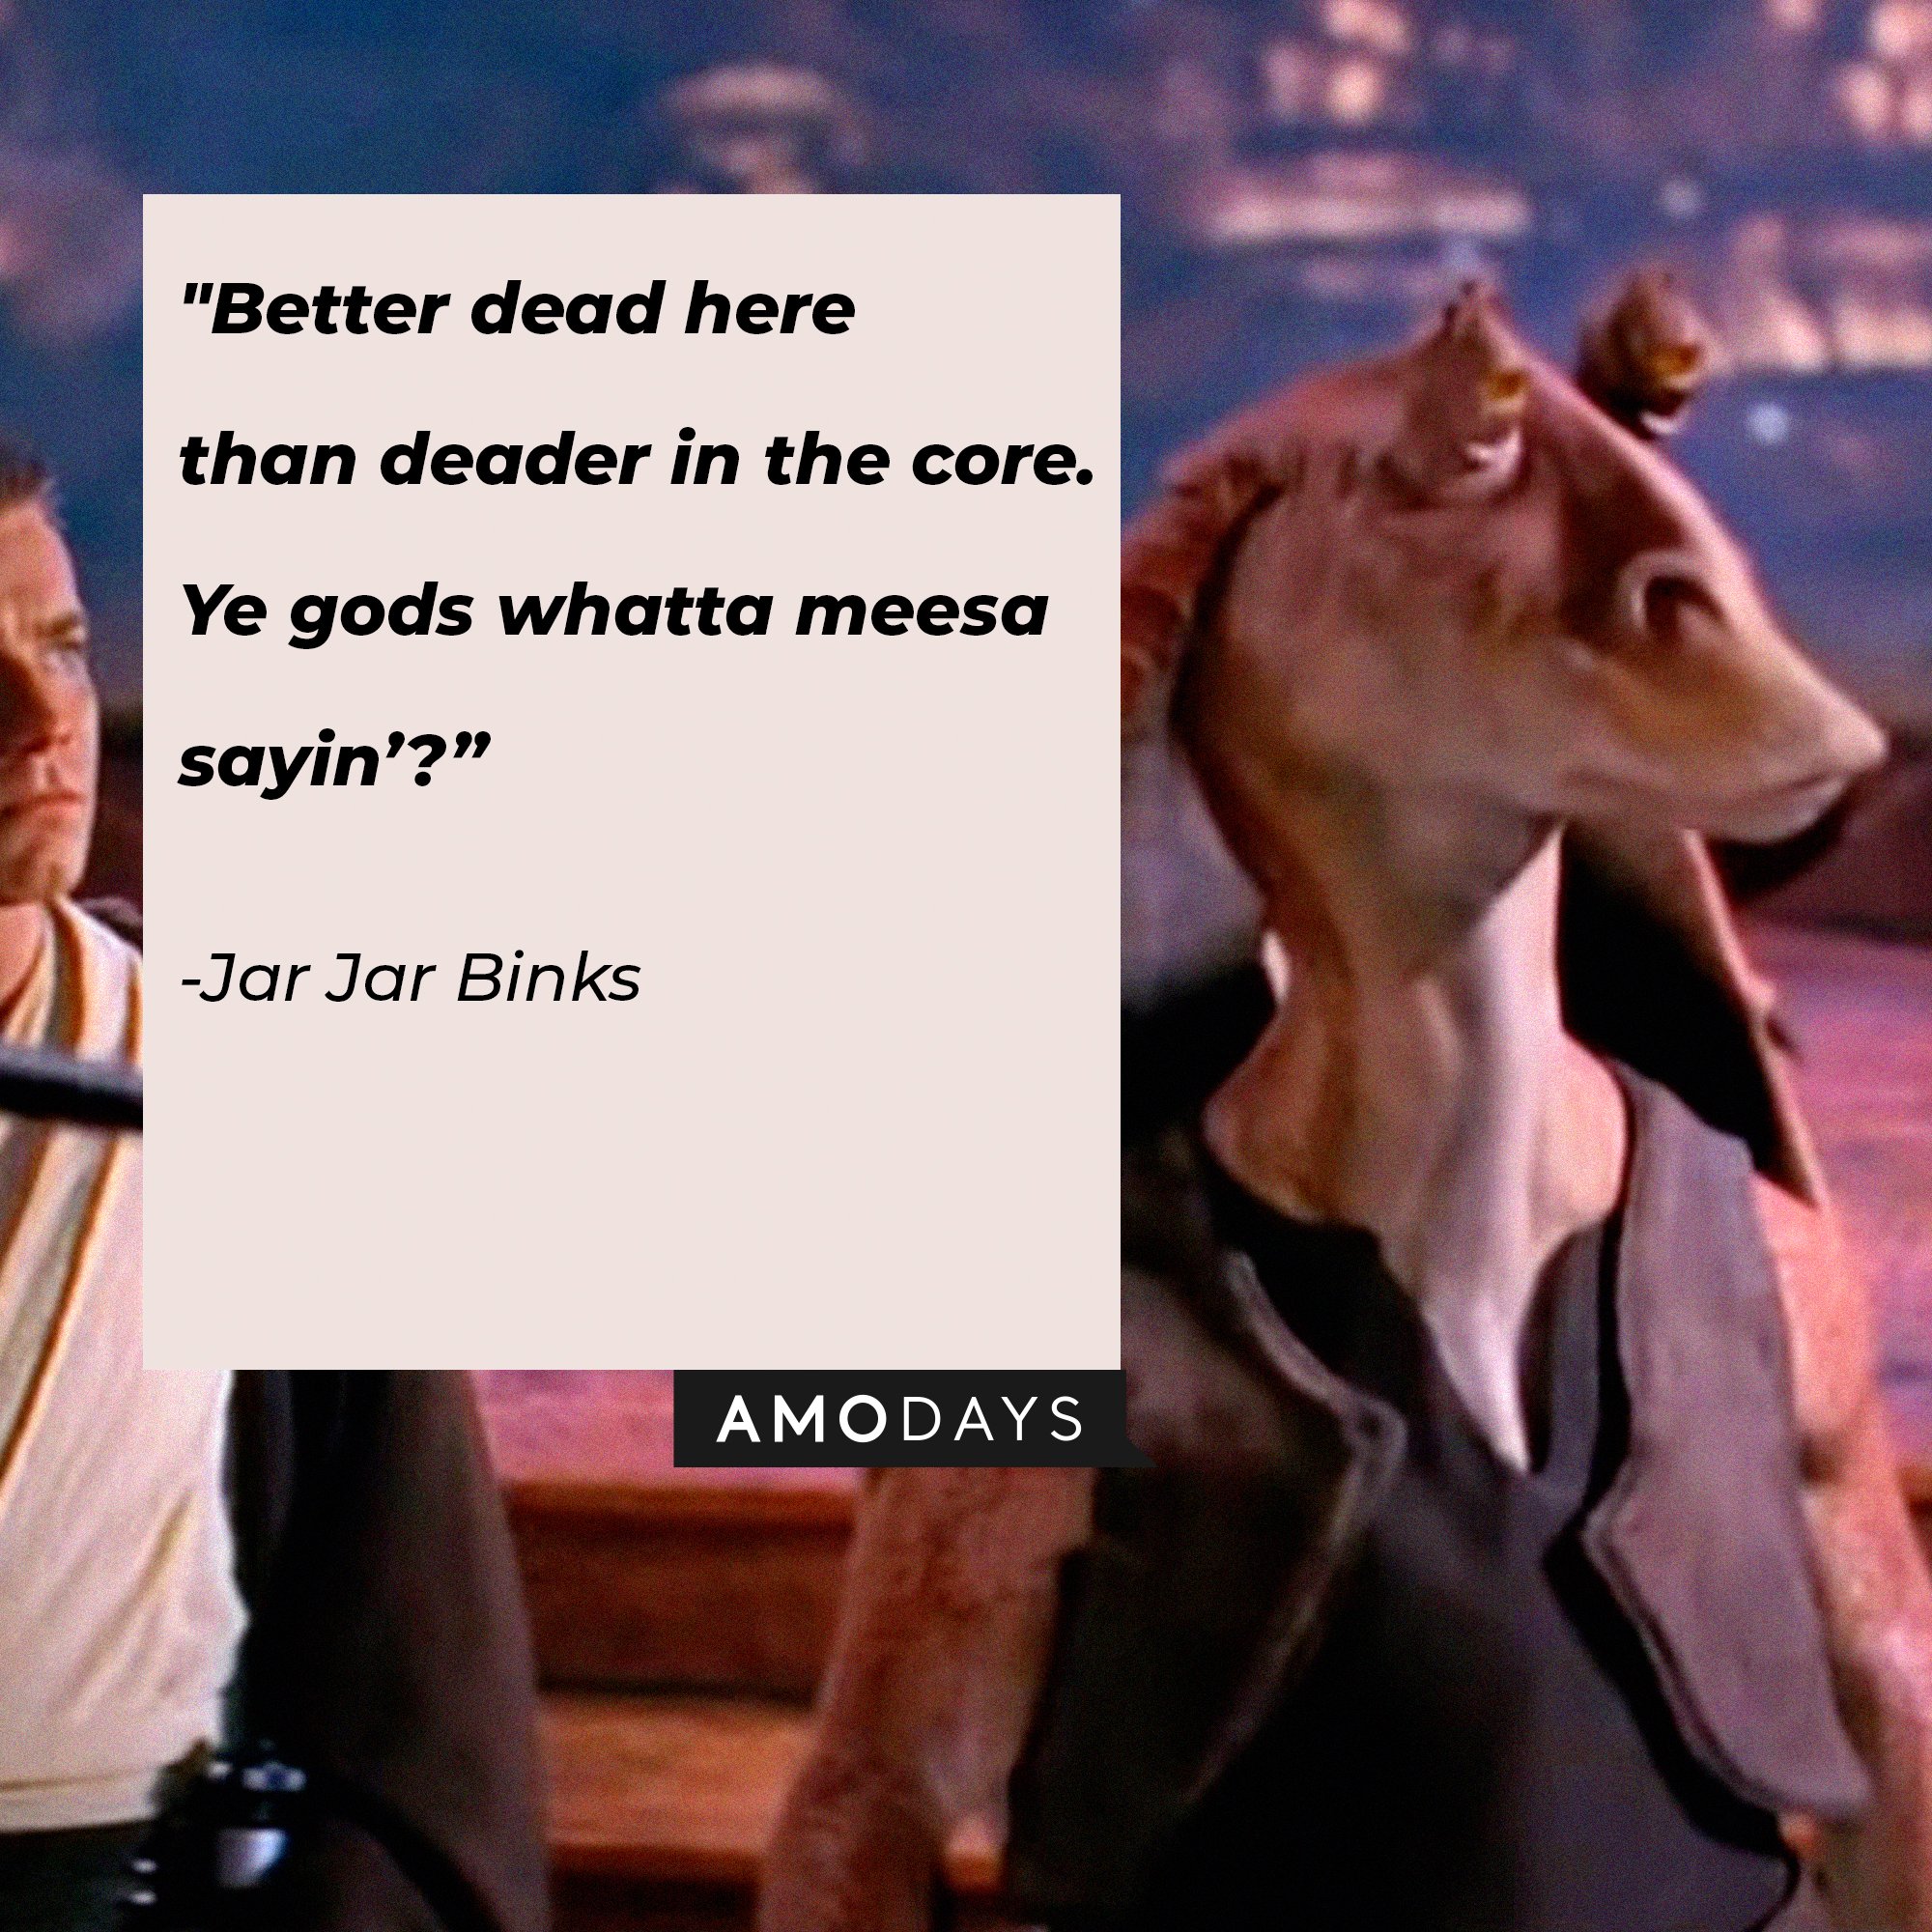  Jar Jar Binks’ quote: "Better dead here than deader in the core. Ye gods whatta meesa sayin’?”  | Image: AmoDays